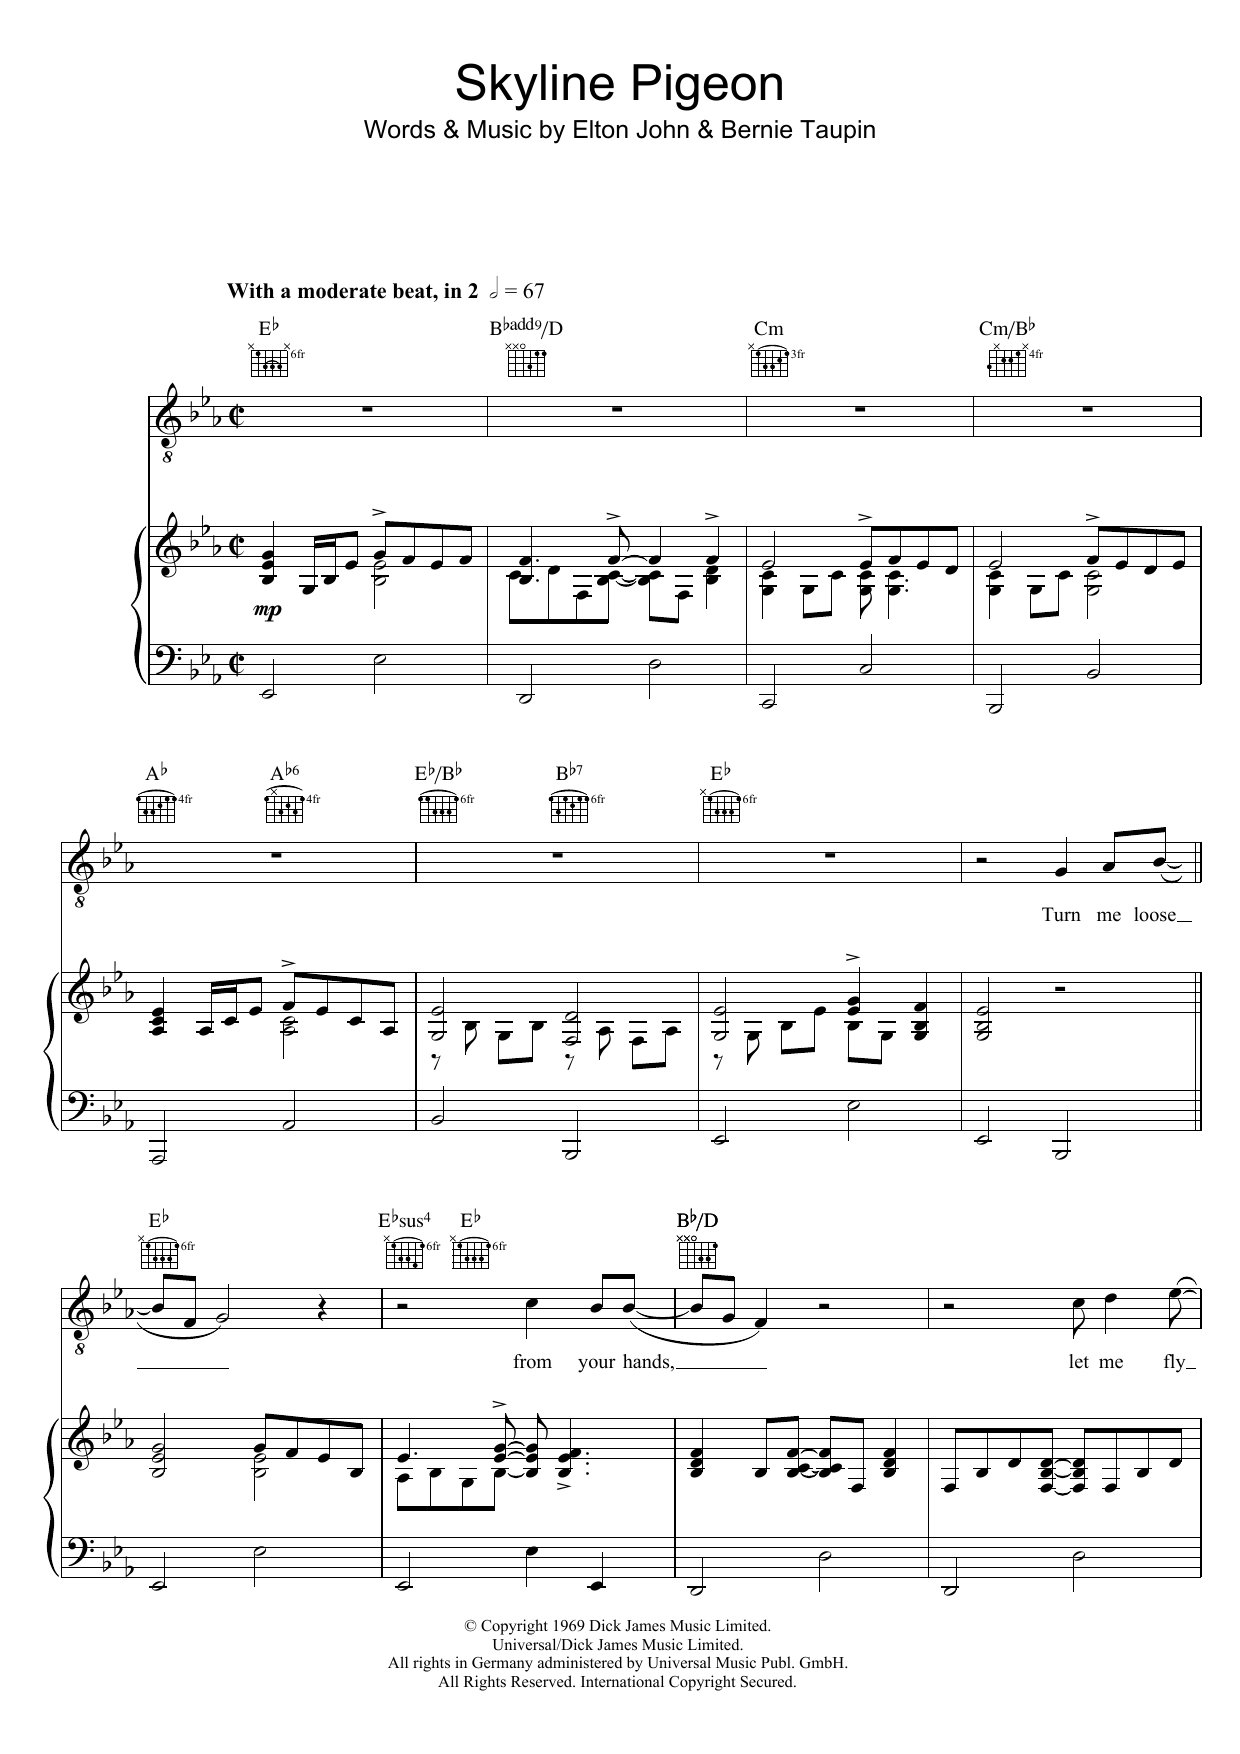 Elton John Skyline Pigeon Sheet Music Notes & Chords for Piano, Vocal & Guitar - Download or Print PDF